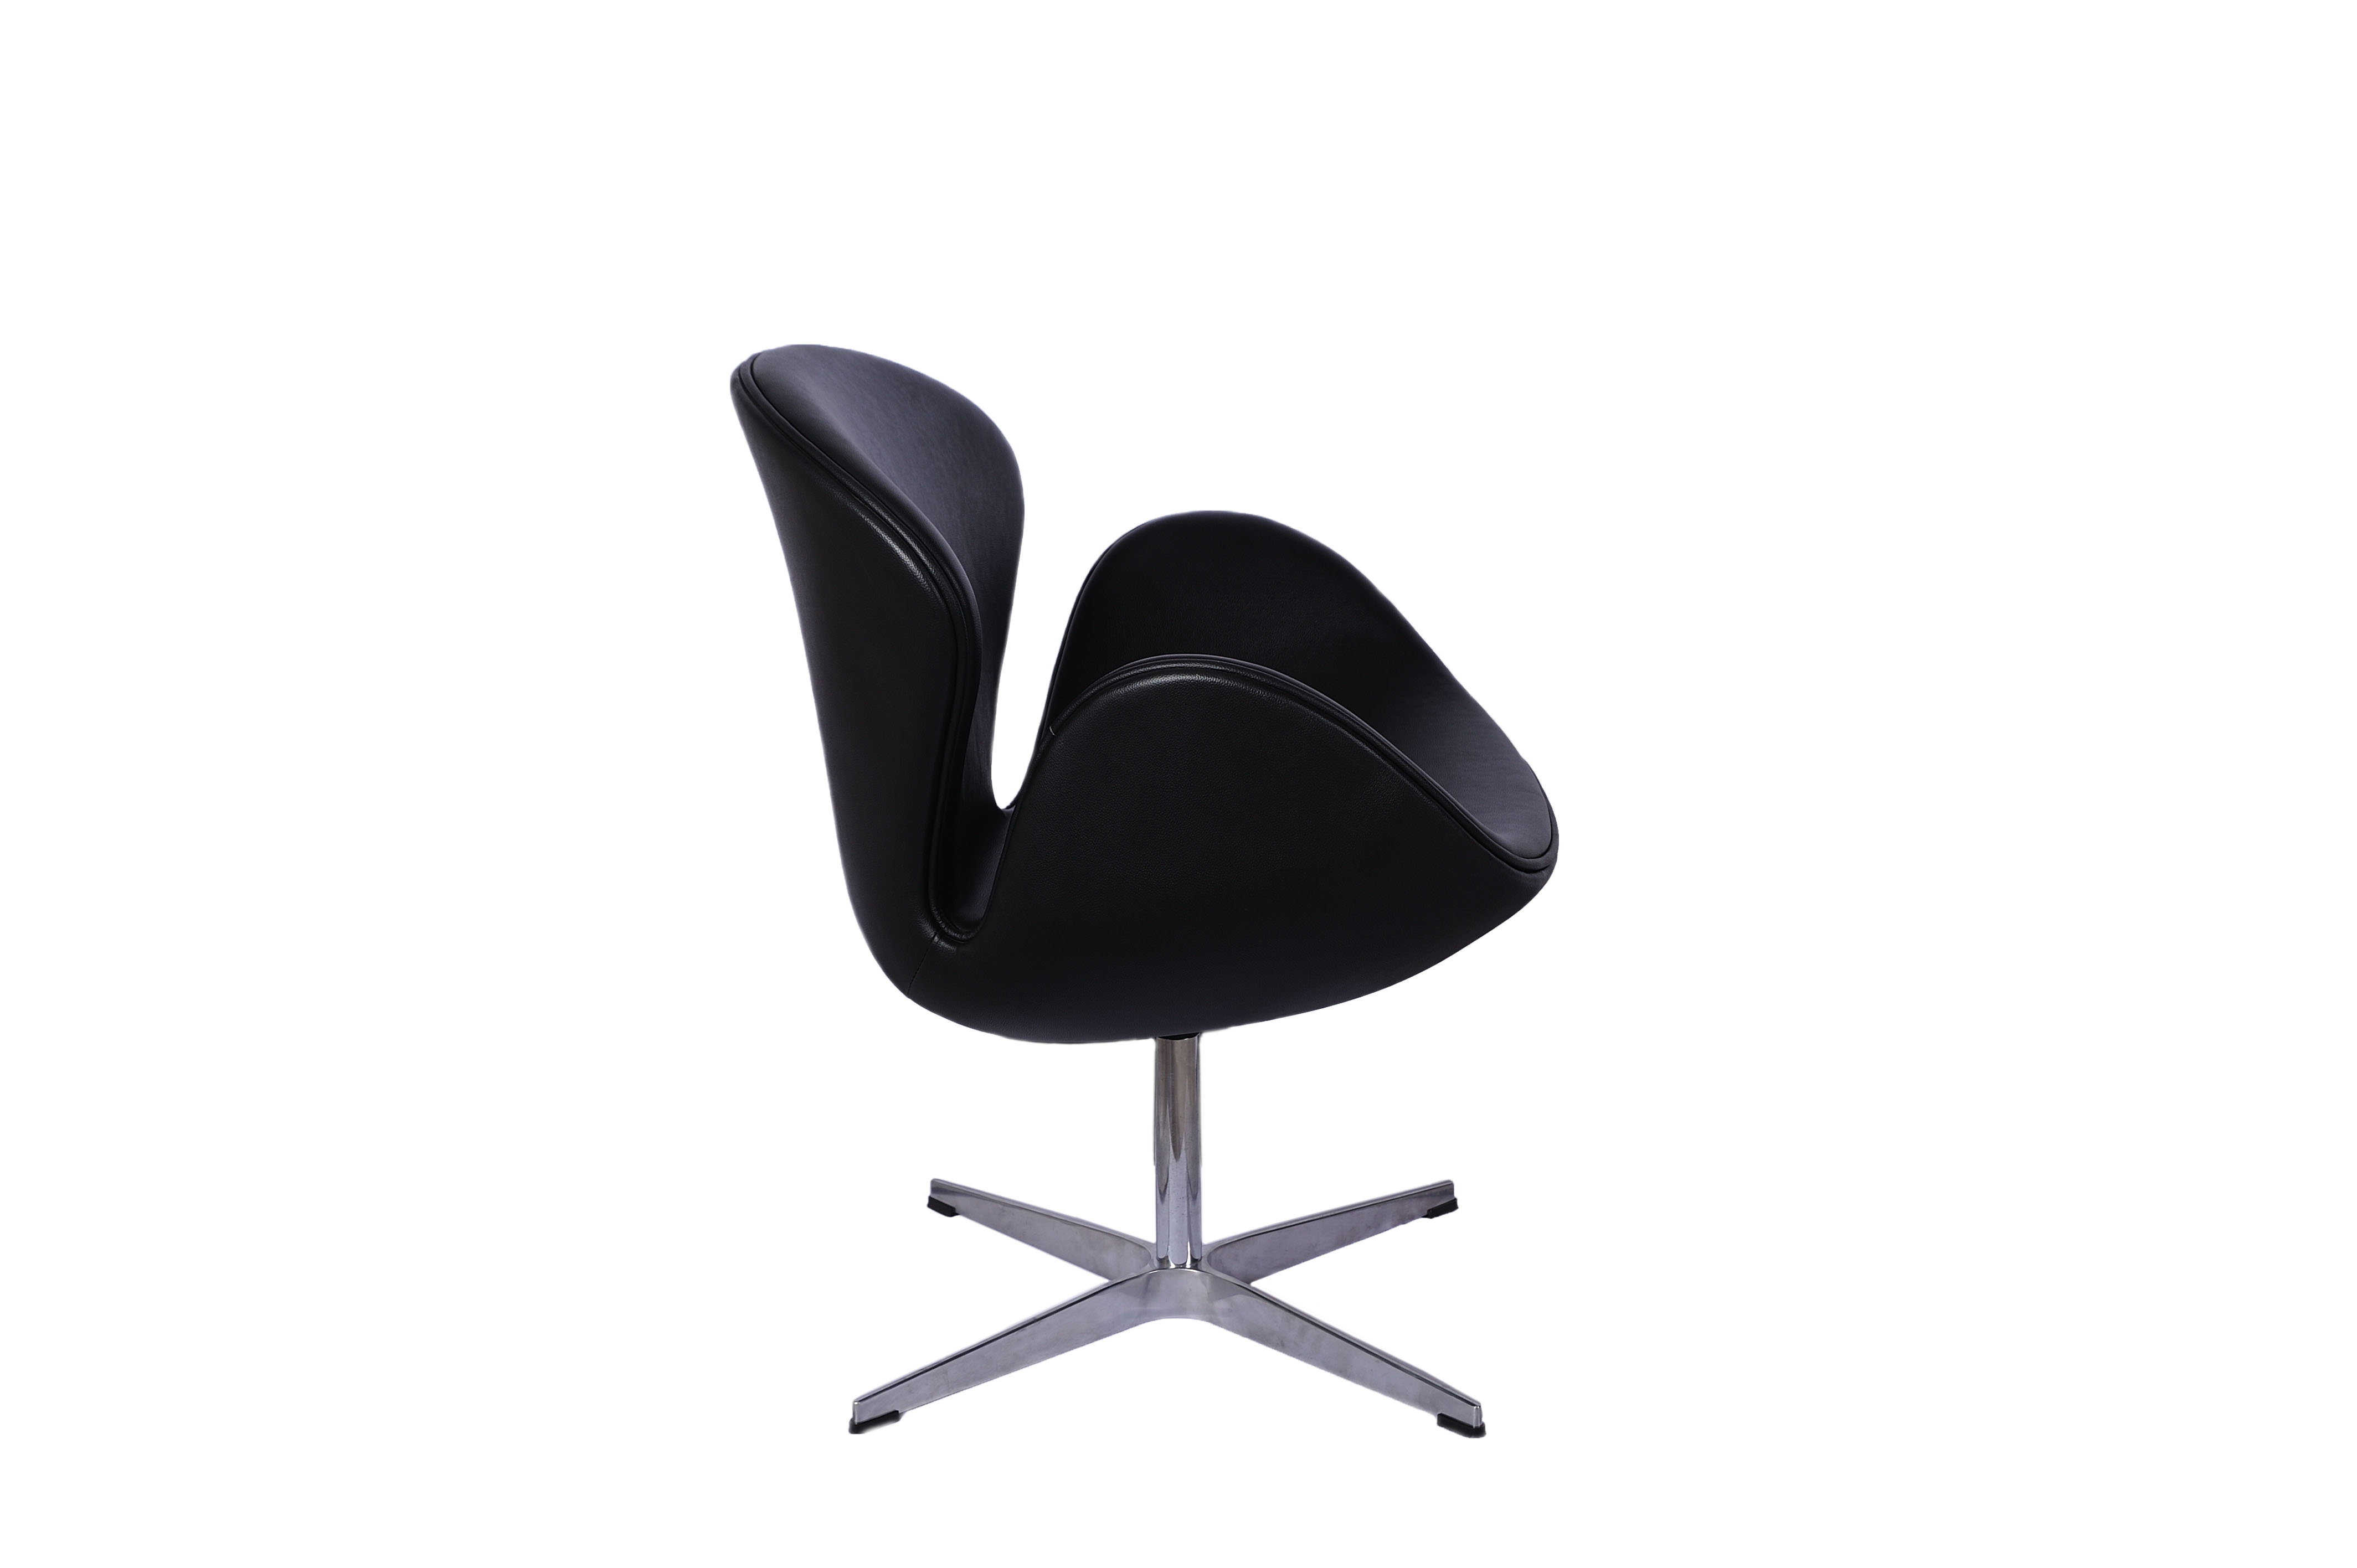 Tengye TENGYE Nordic Swan Chair Classic Office Leisure Chair Creative Fashion Leisure Negotiation Chair TY-402B